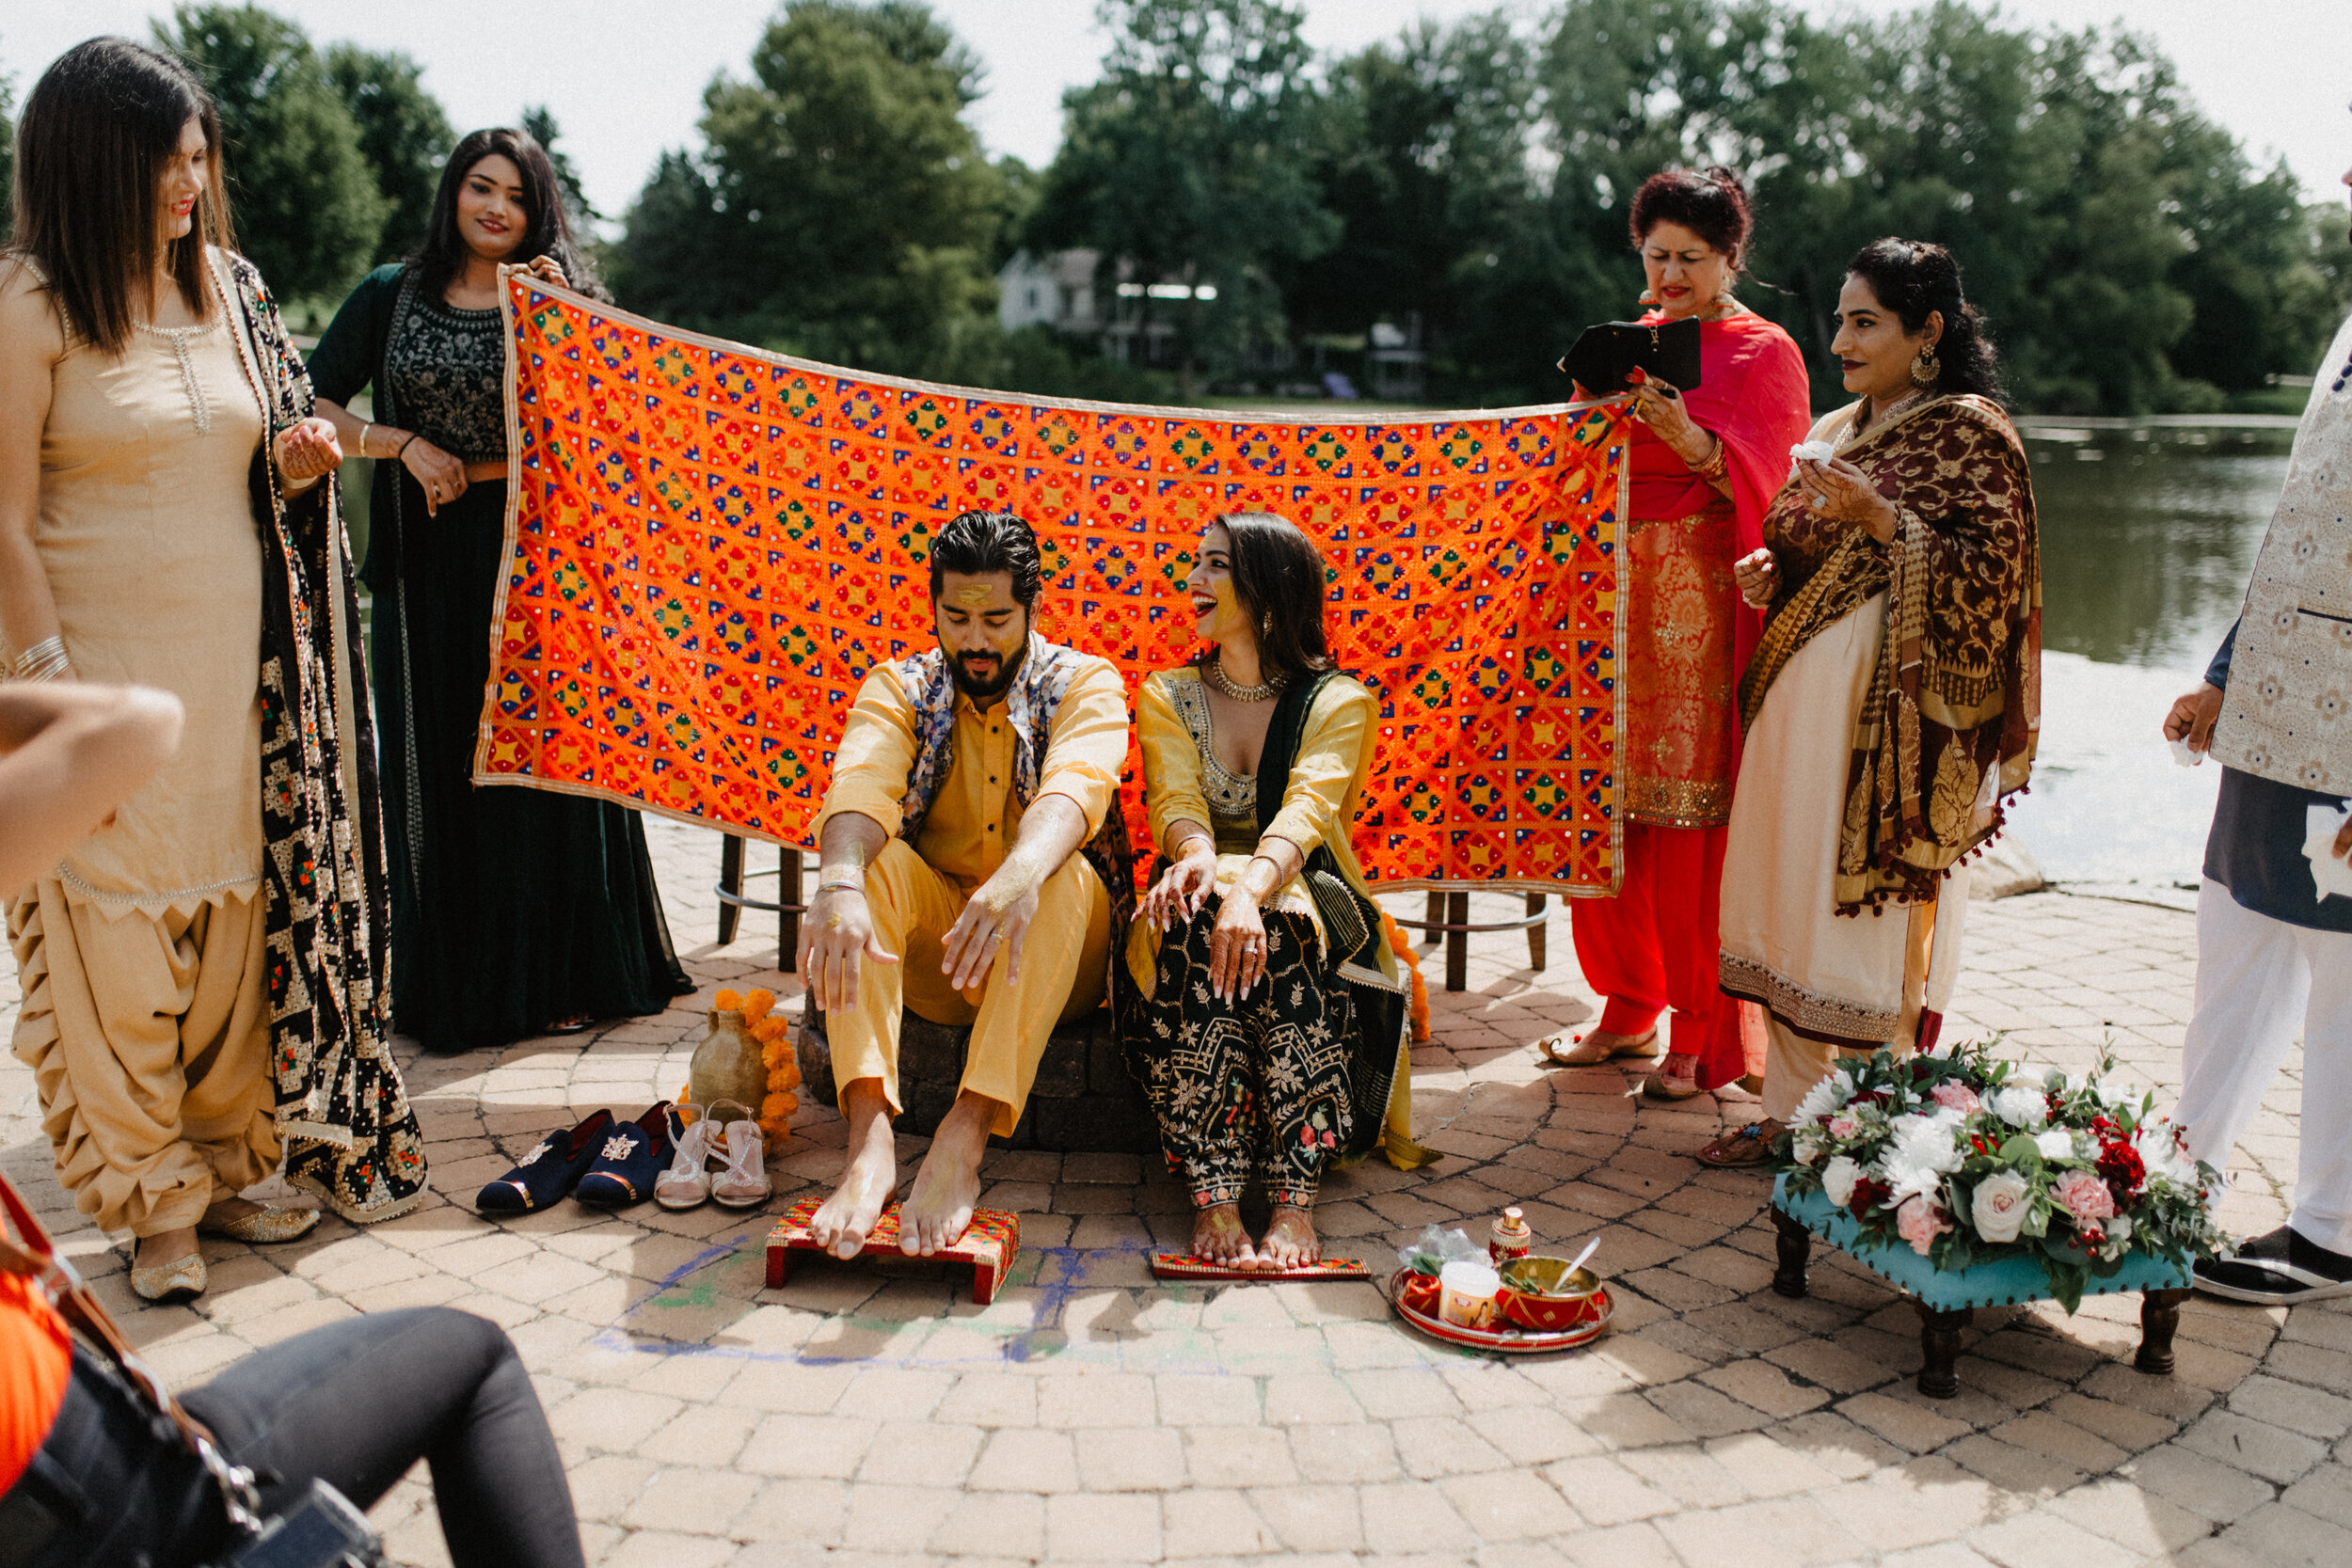 ShadowShinePictures-Sukhi-Balraj-Bains-Kaur-Grand-Rapids-Indian-Wedding-Photography-8.jpg